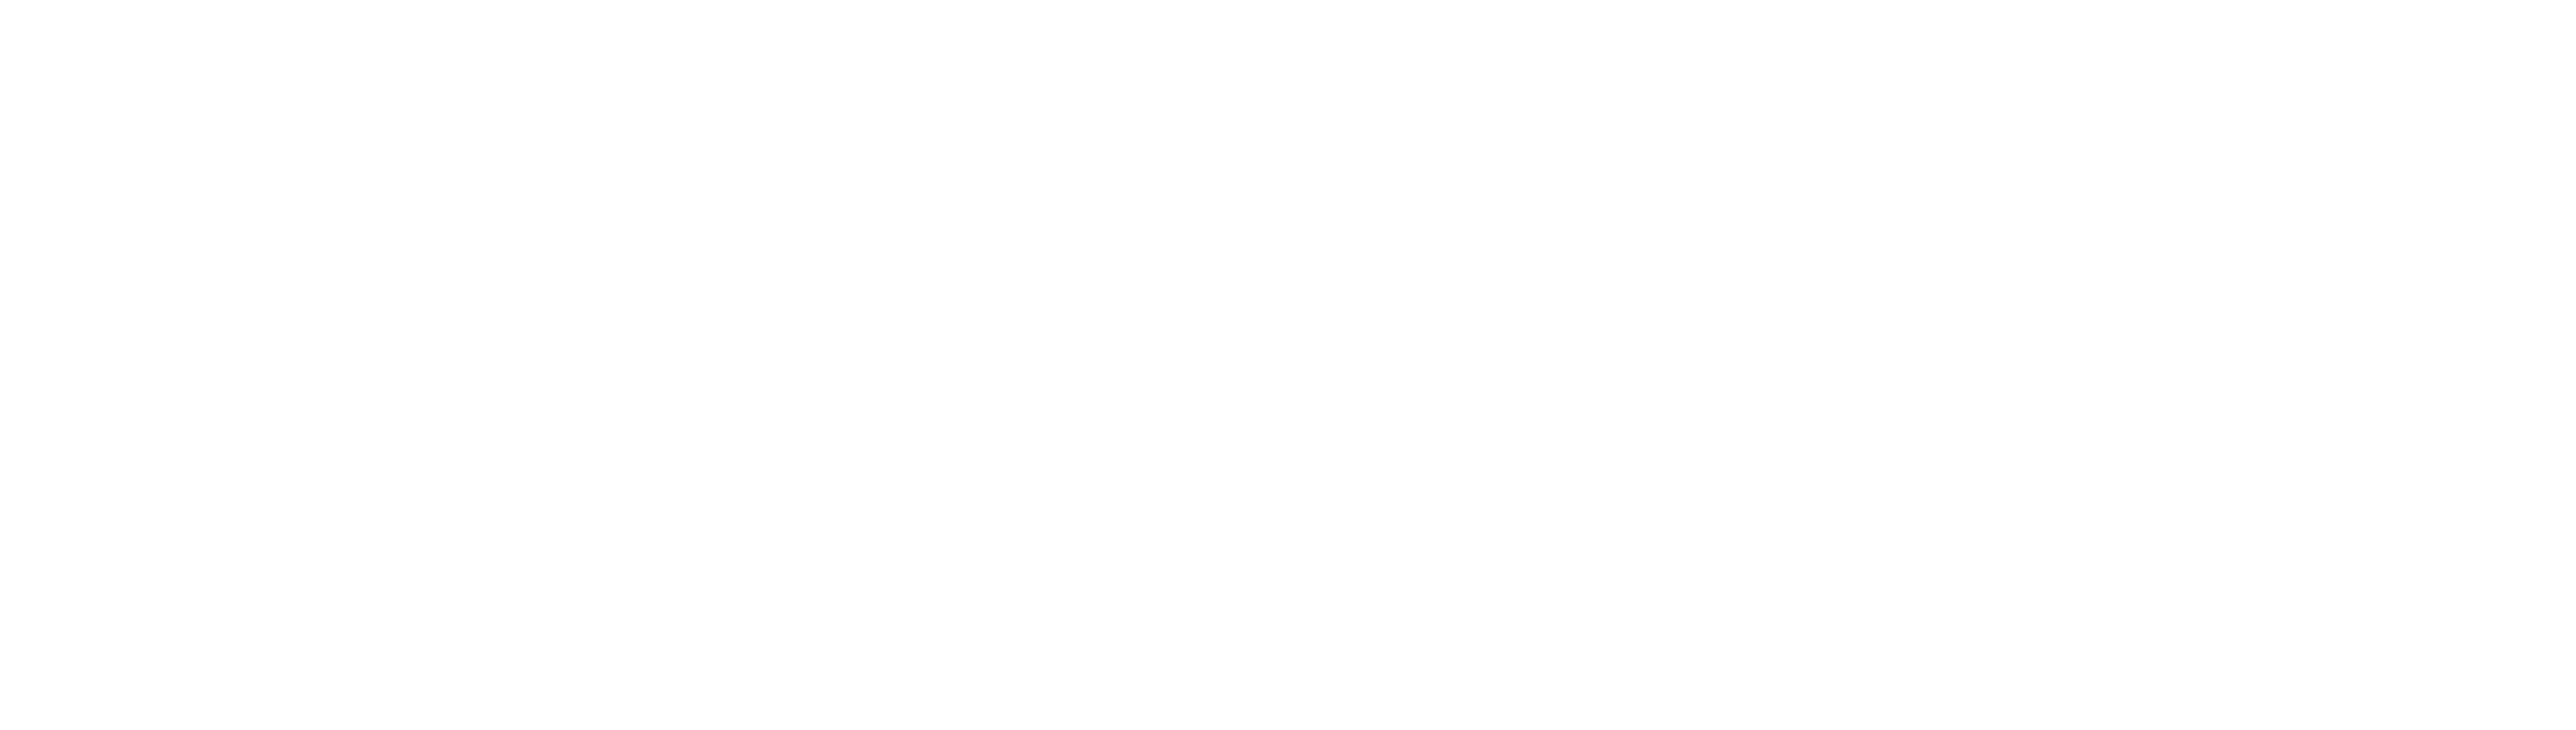 UnifiedCommunications.com Logo White